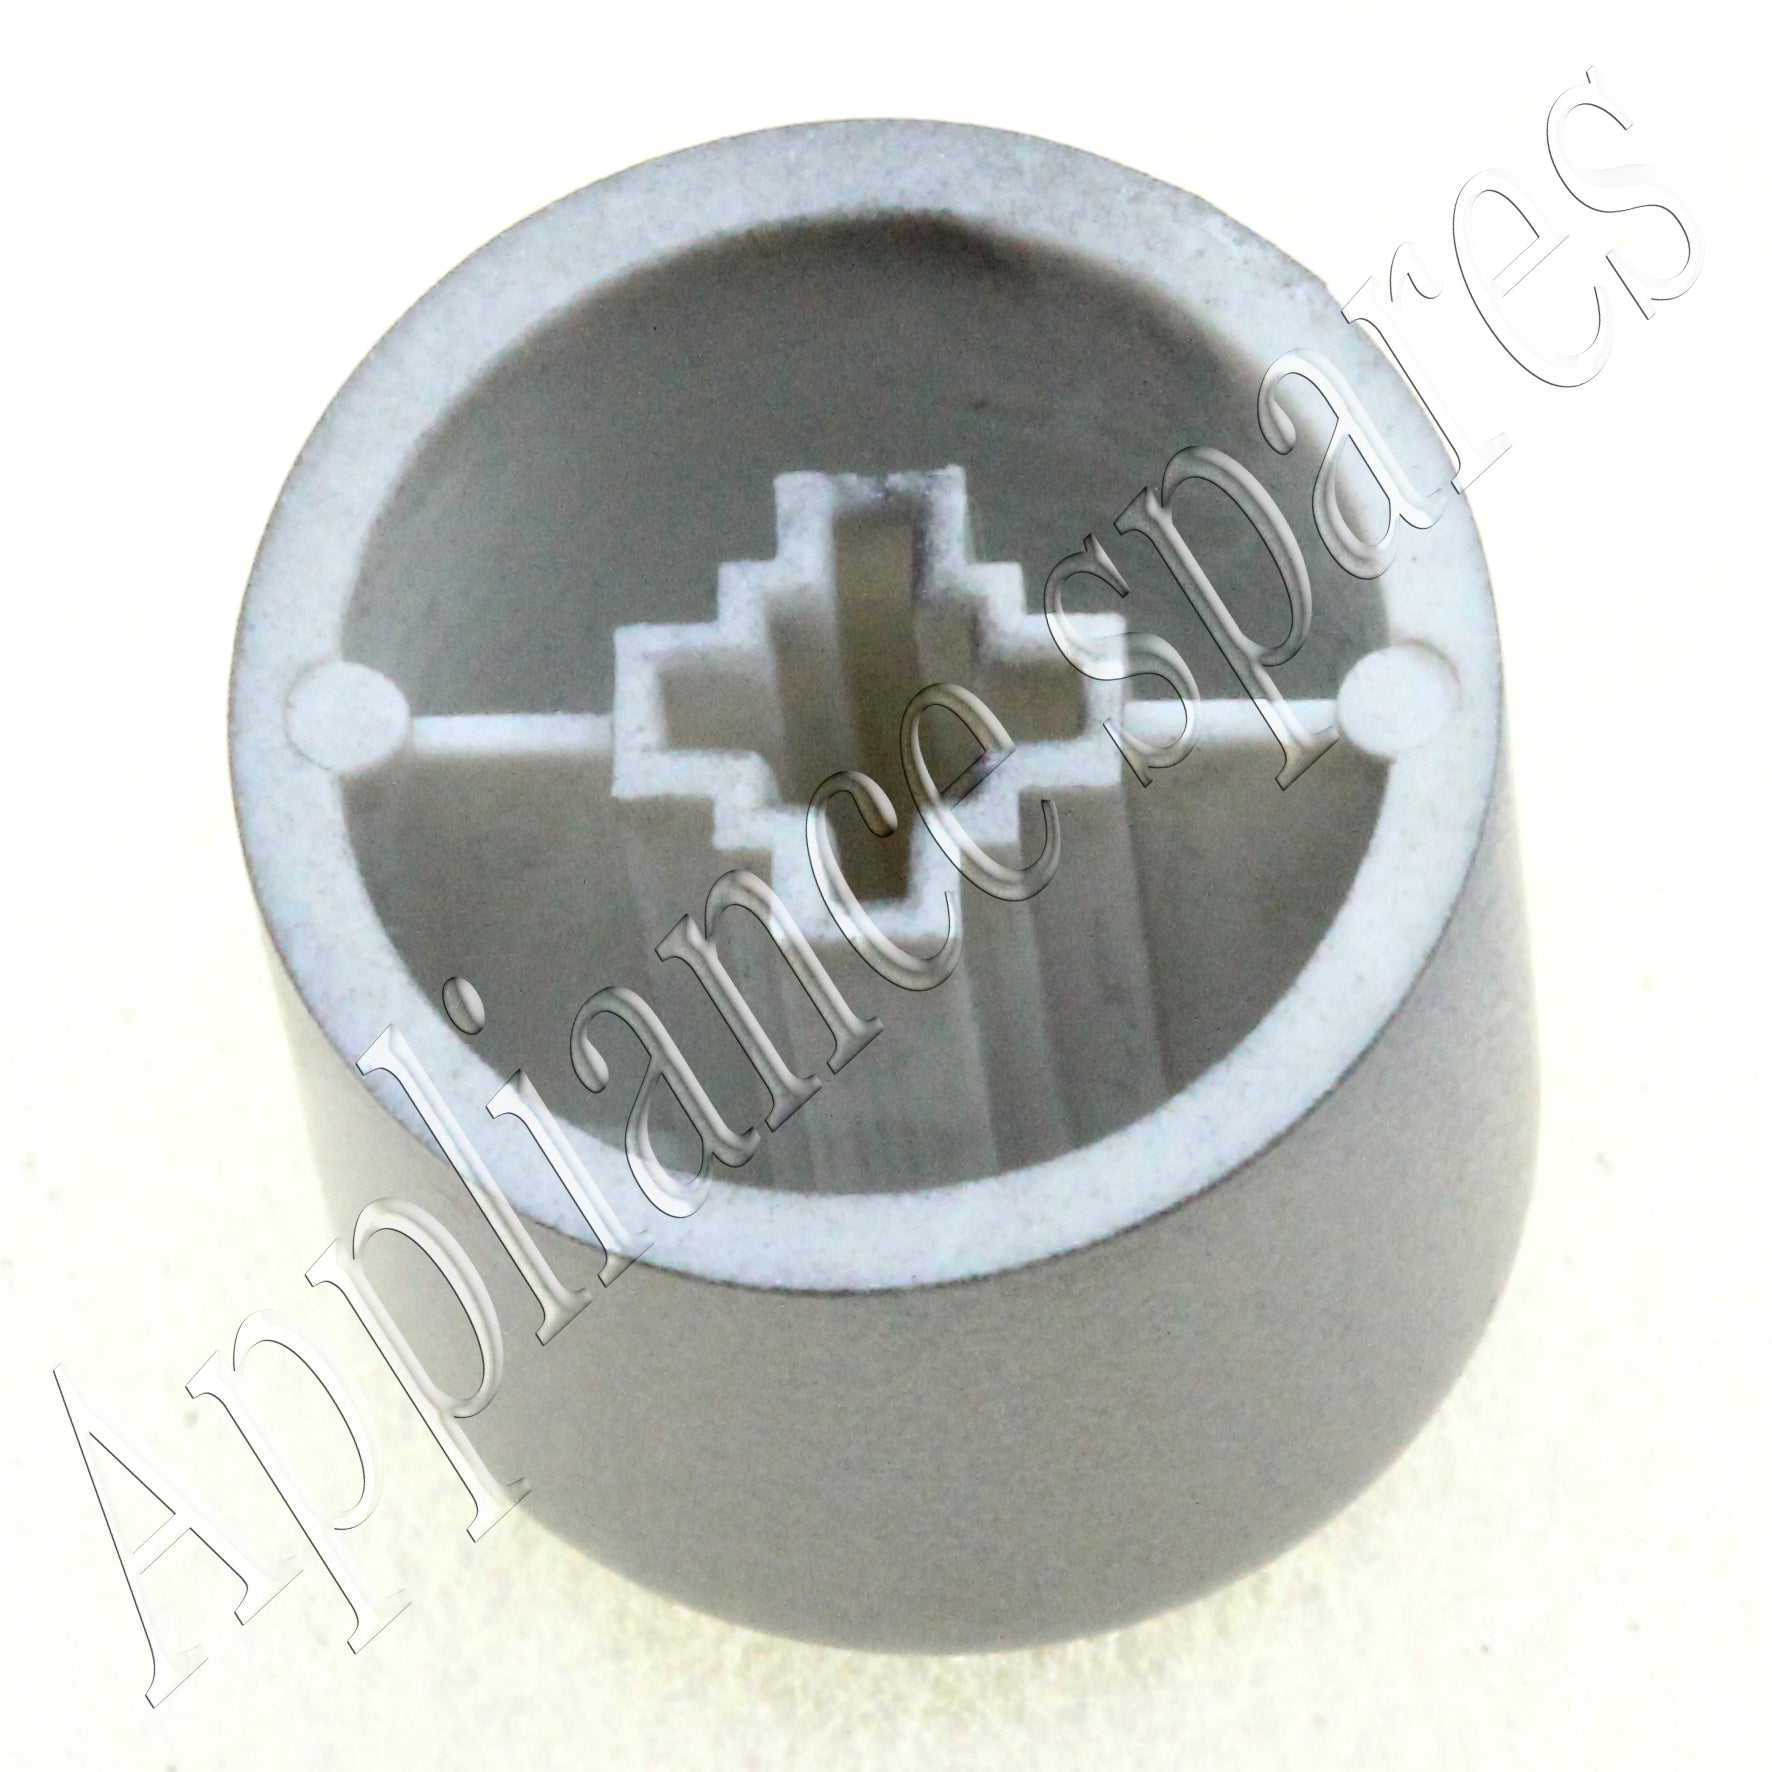 Kelvinator Dishwasher Metallic Power Button